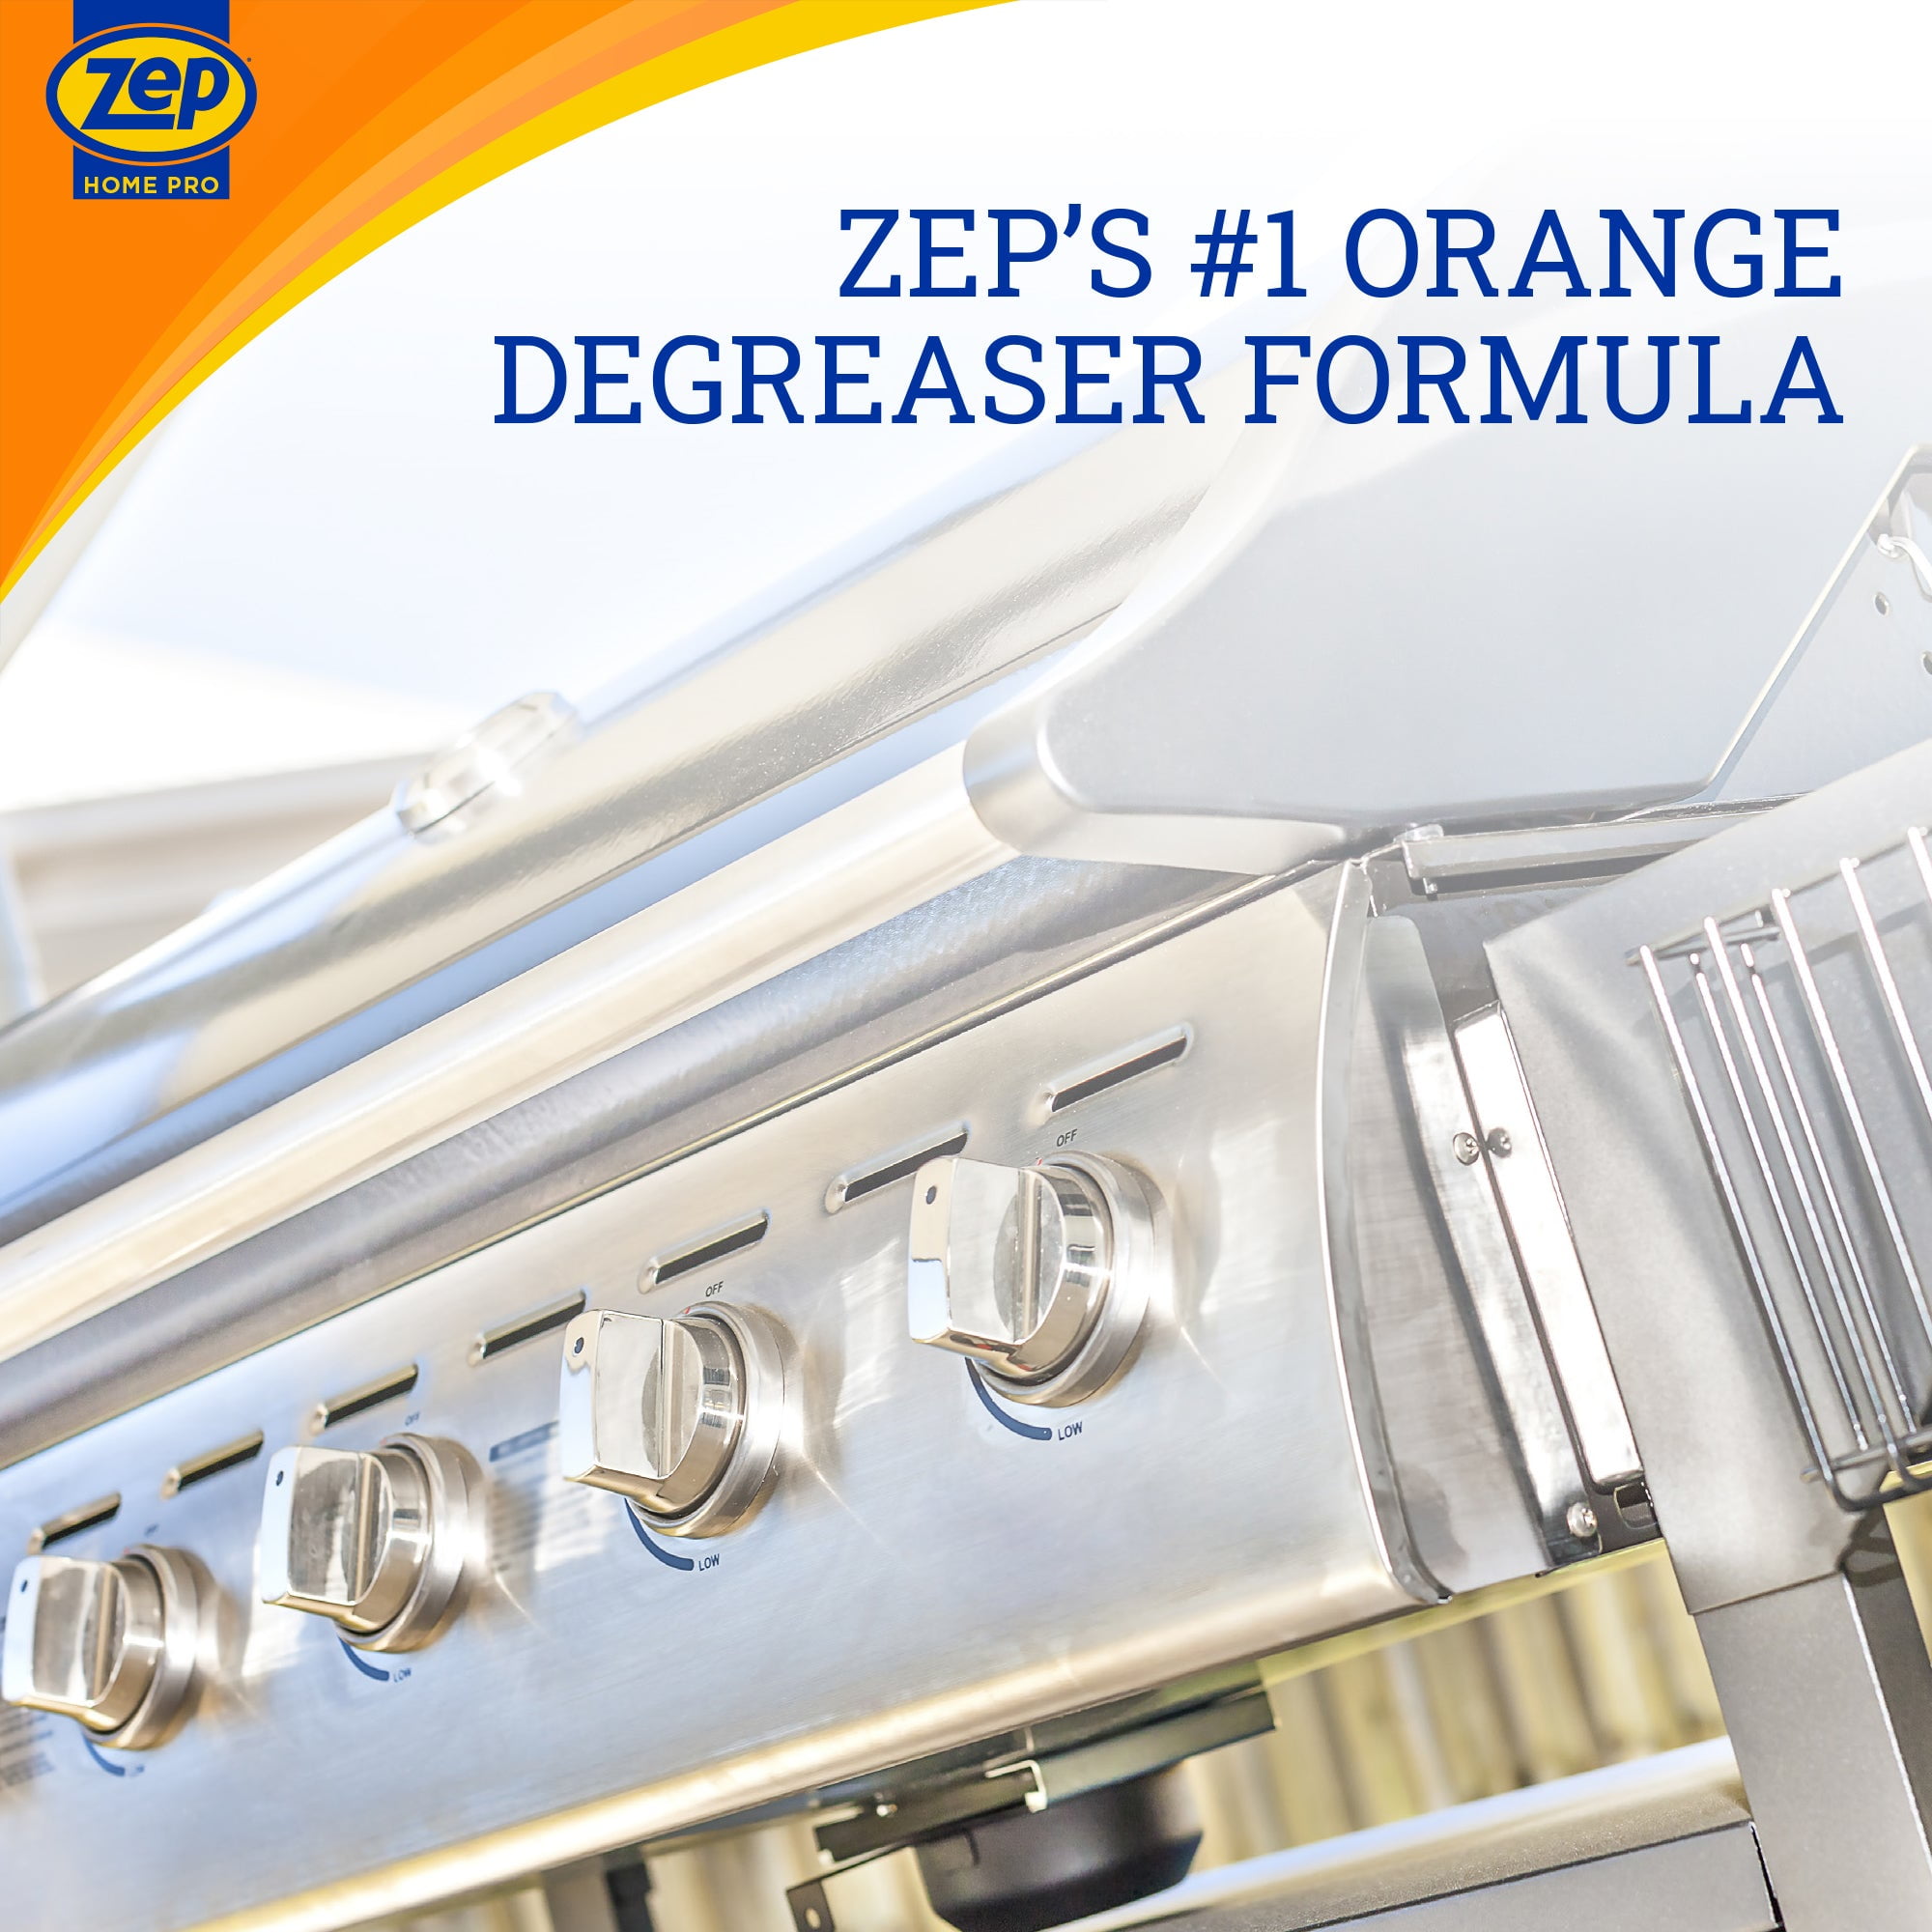 Zep Heavy Duty Orange Plus Kitchen Degreaser - 24 Fl Oz : Target